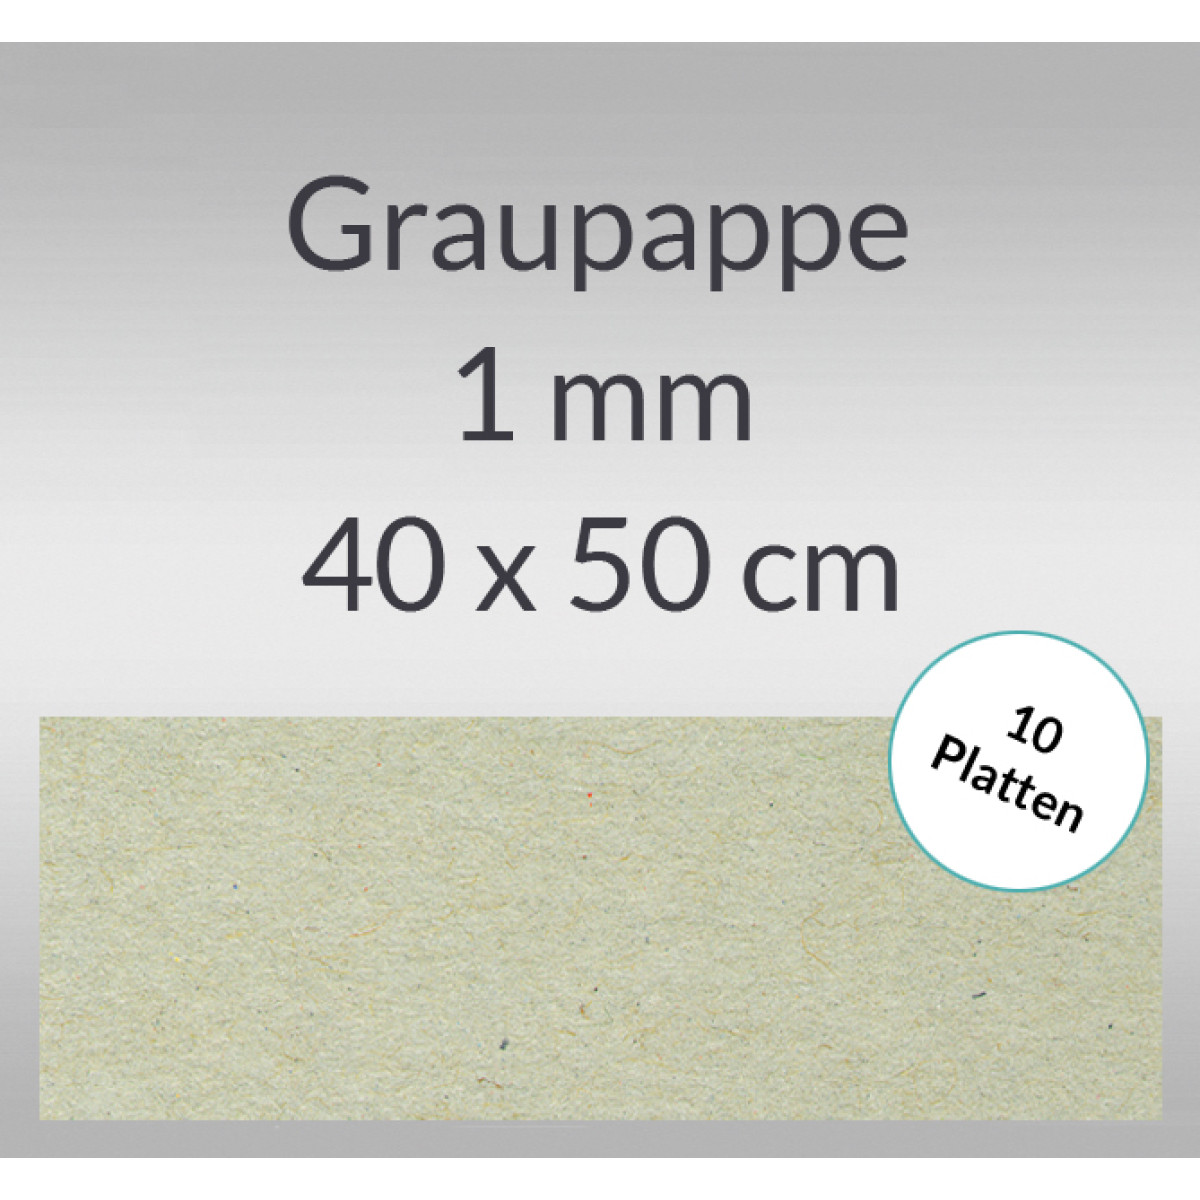 Graupappe 40 x 50 cm - 1 mm